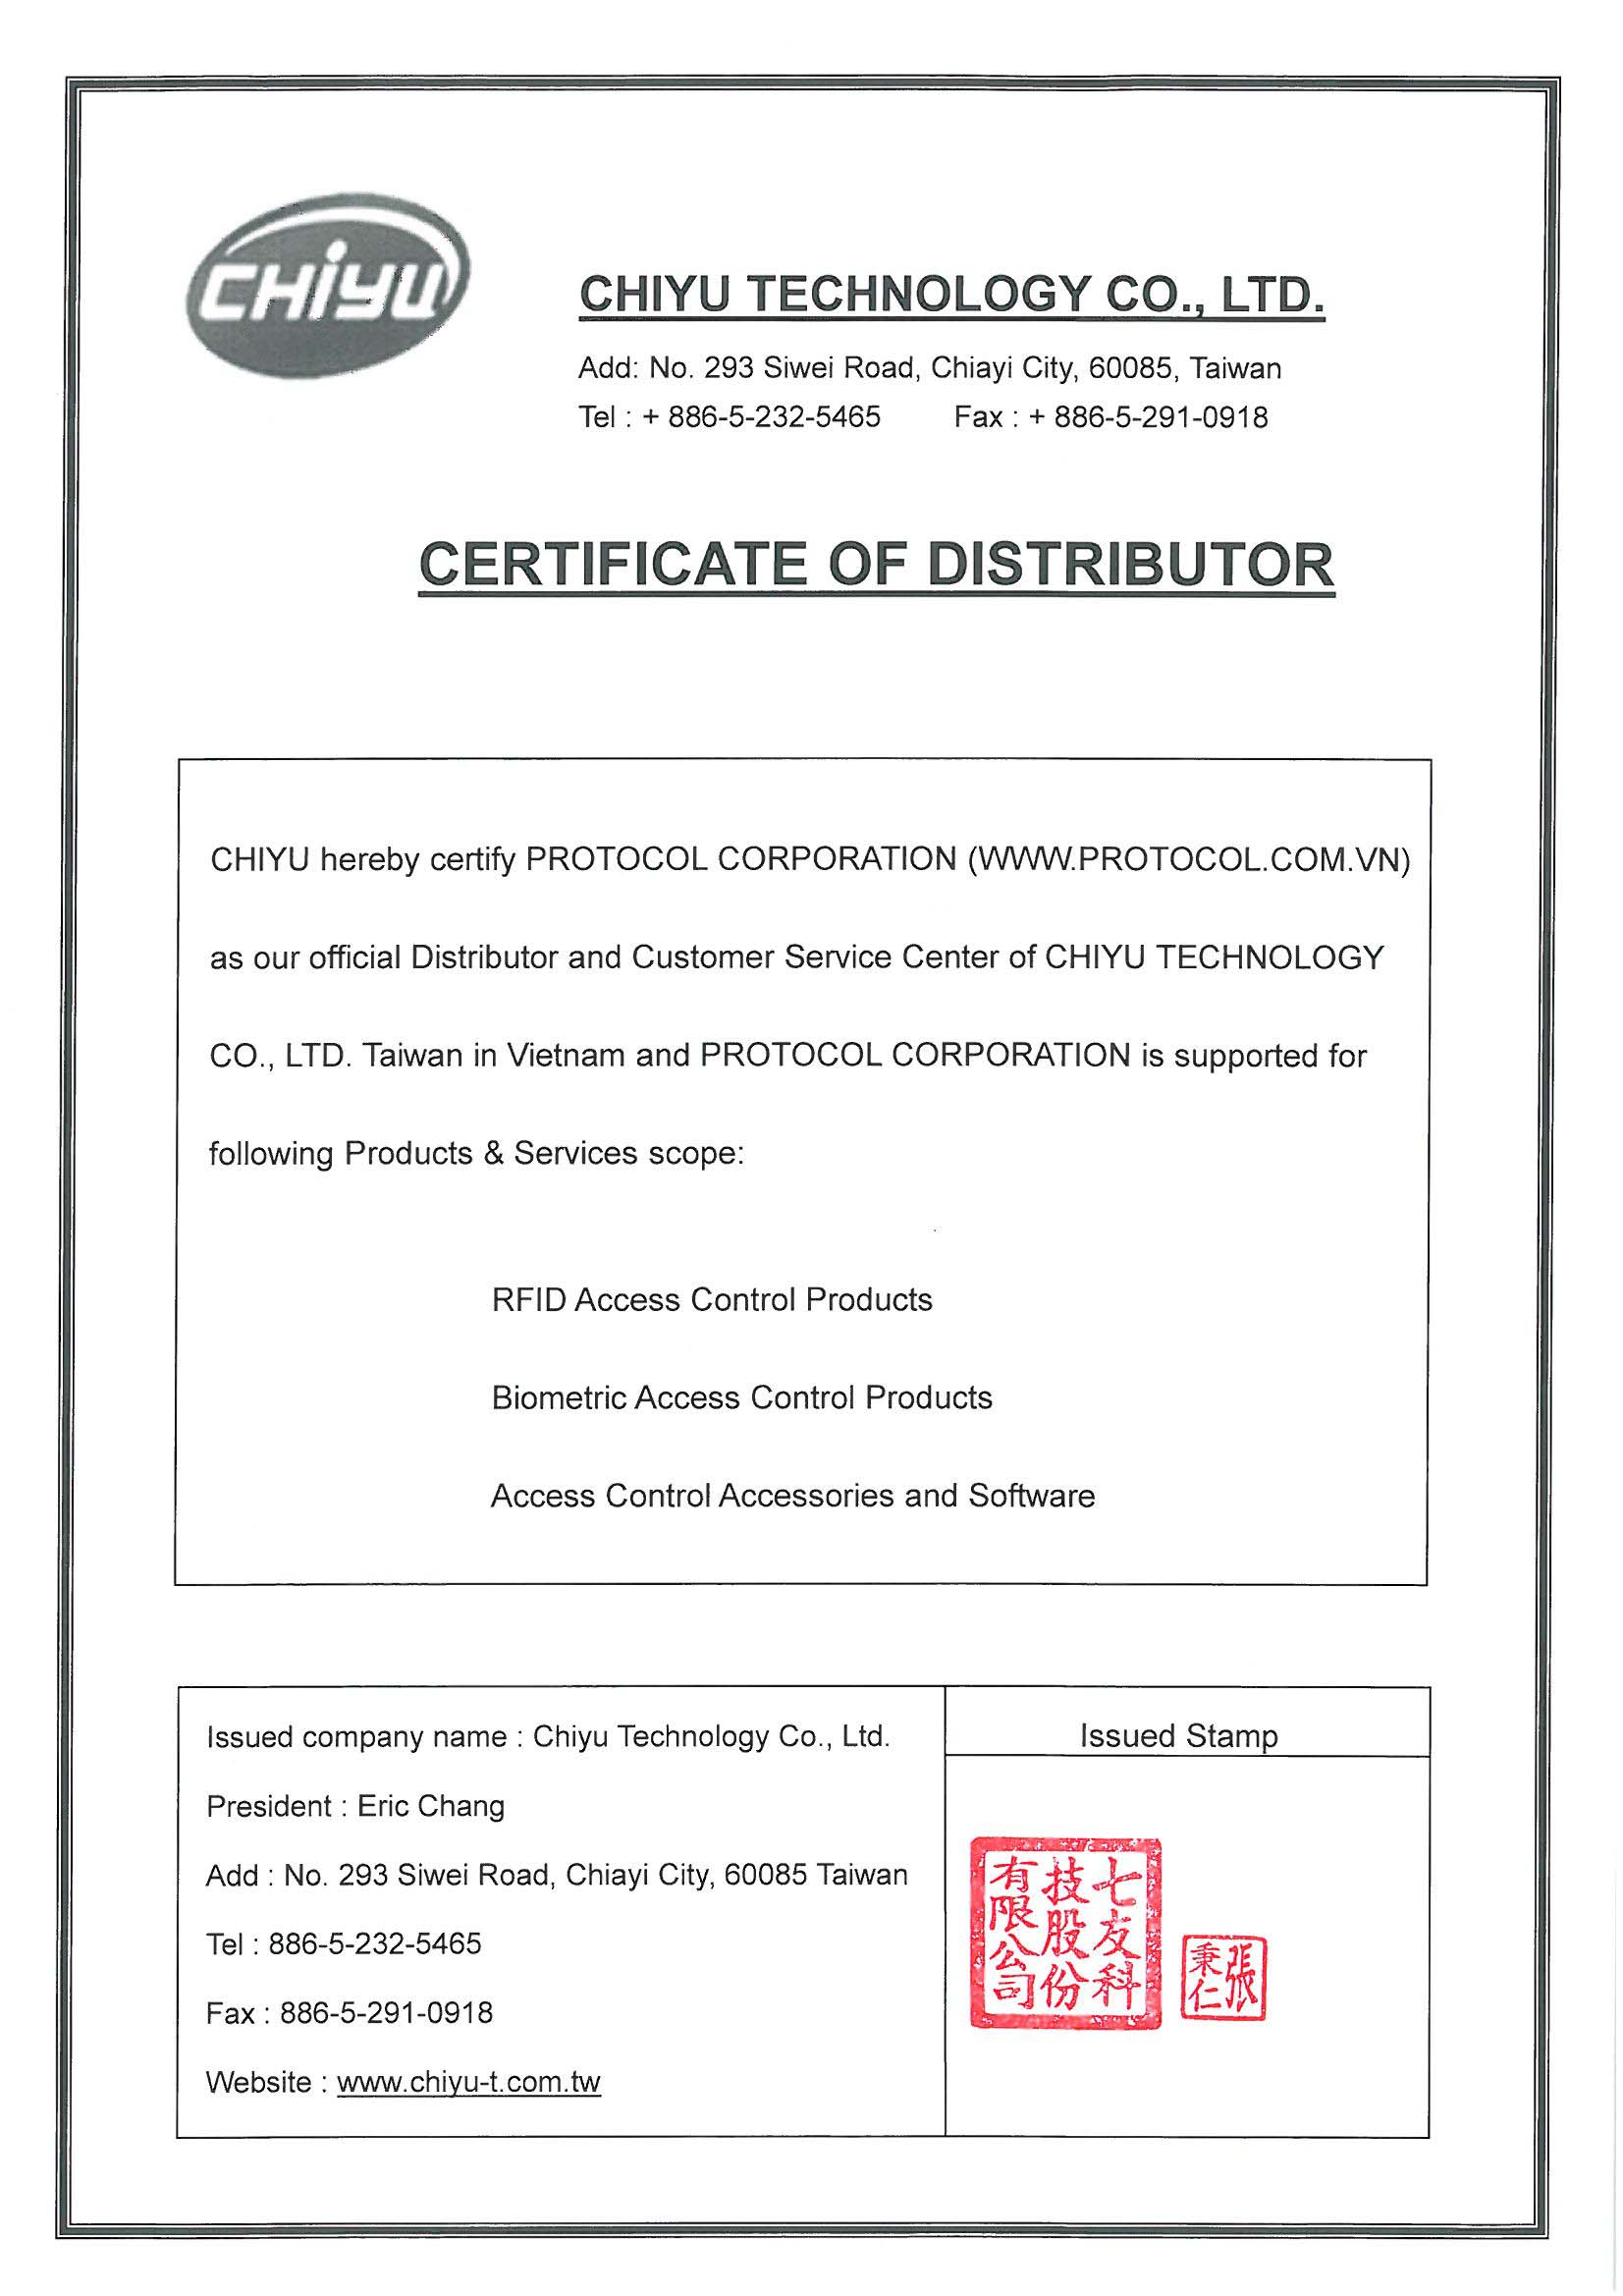 Certification of Distributor 2015 PROTOCOL CORPORATION